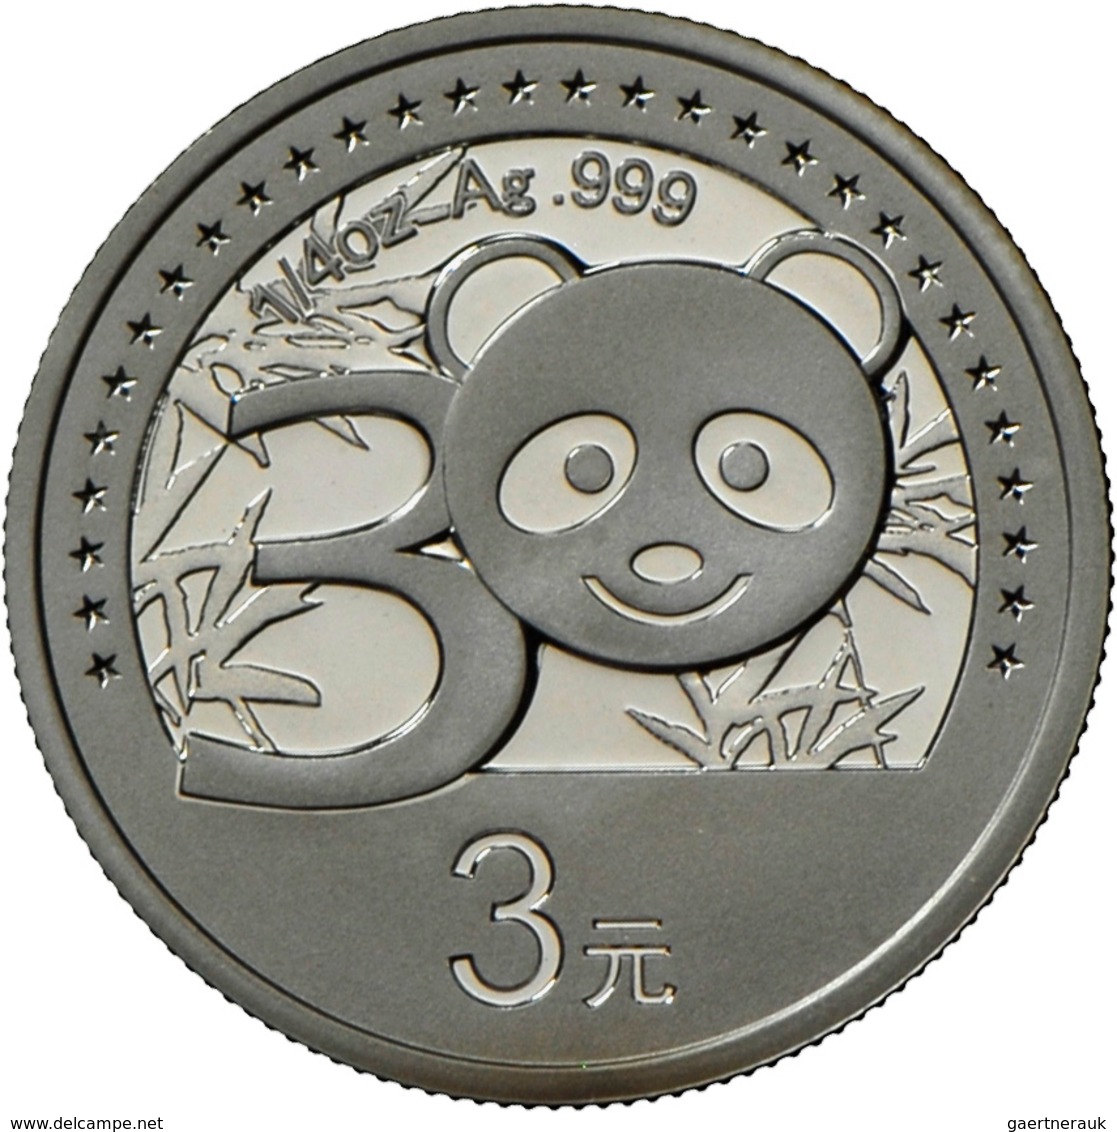 China - Volksrepublik: Lot 2 Silbermünzen: 10 Yuan 2012 Jahr Des Drachen Farbmünze, 1 OZ 999/1000 Si - China